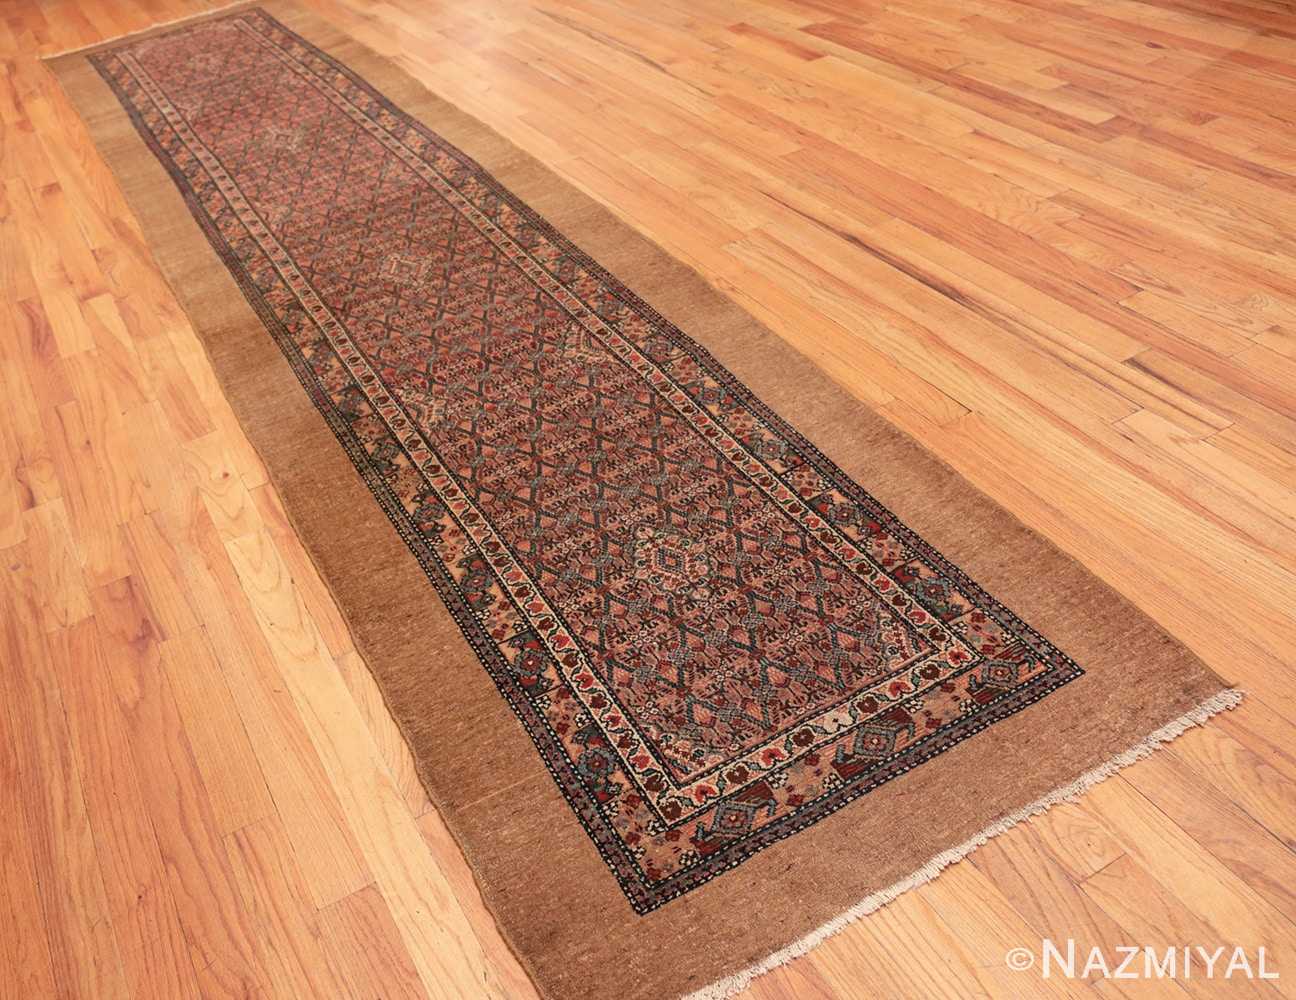 Full Antique Serab Persian runner rug 42392 by Nazmiyal